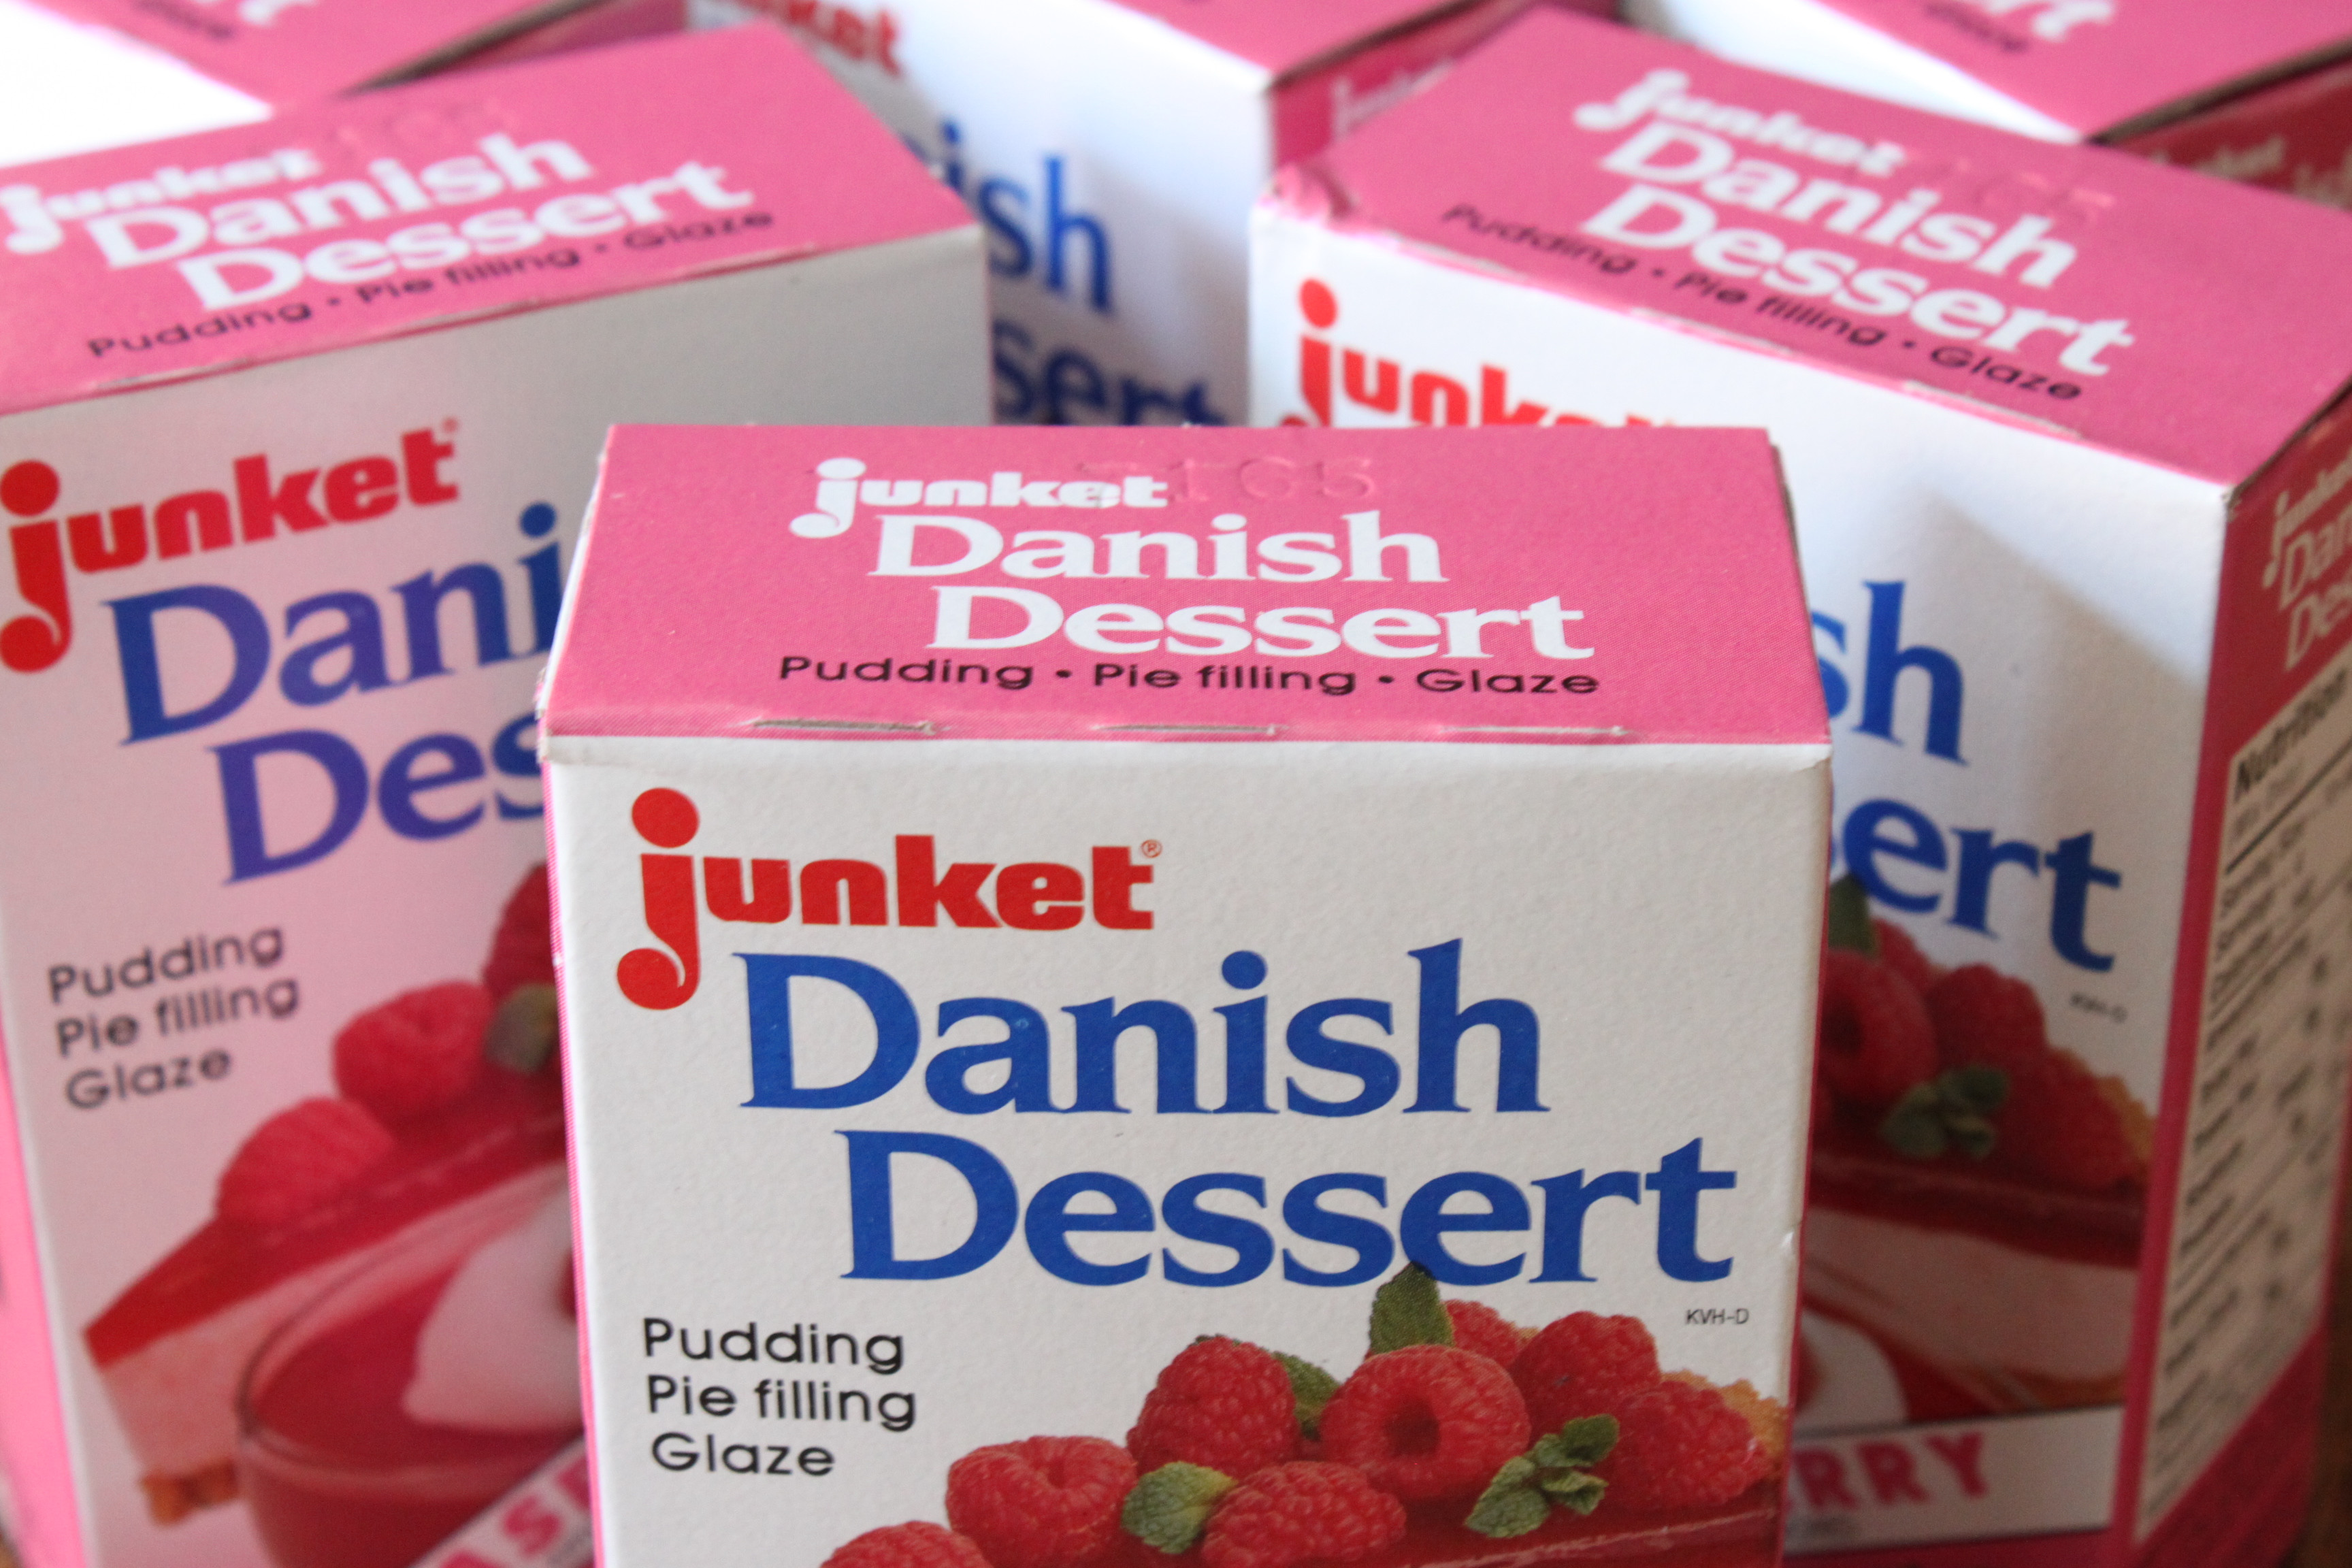 Junket Danish Dessert
 Danish Raspberry Pudding